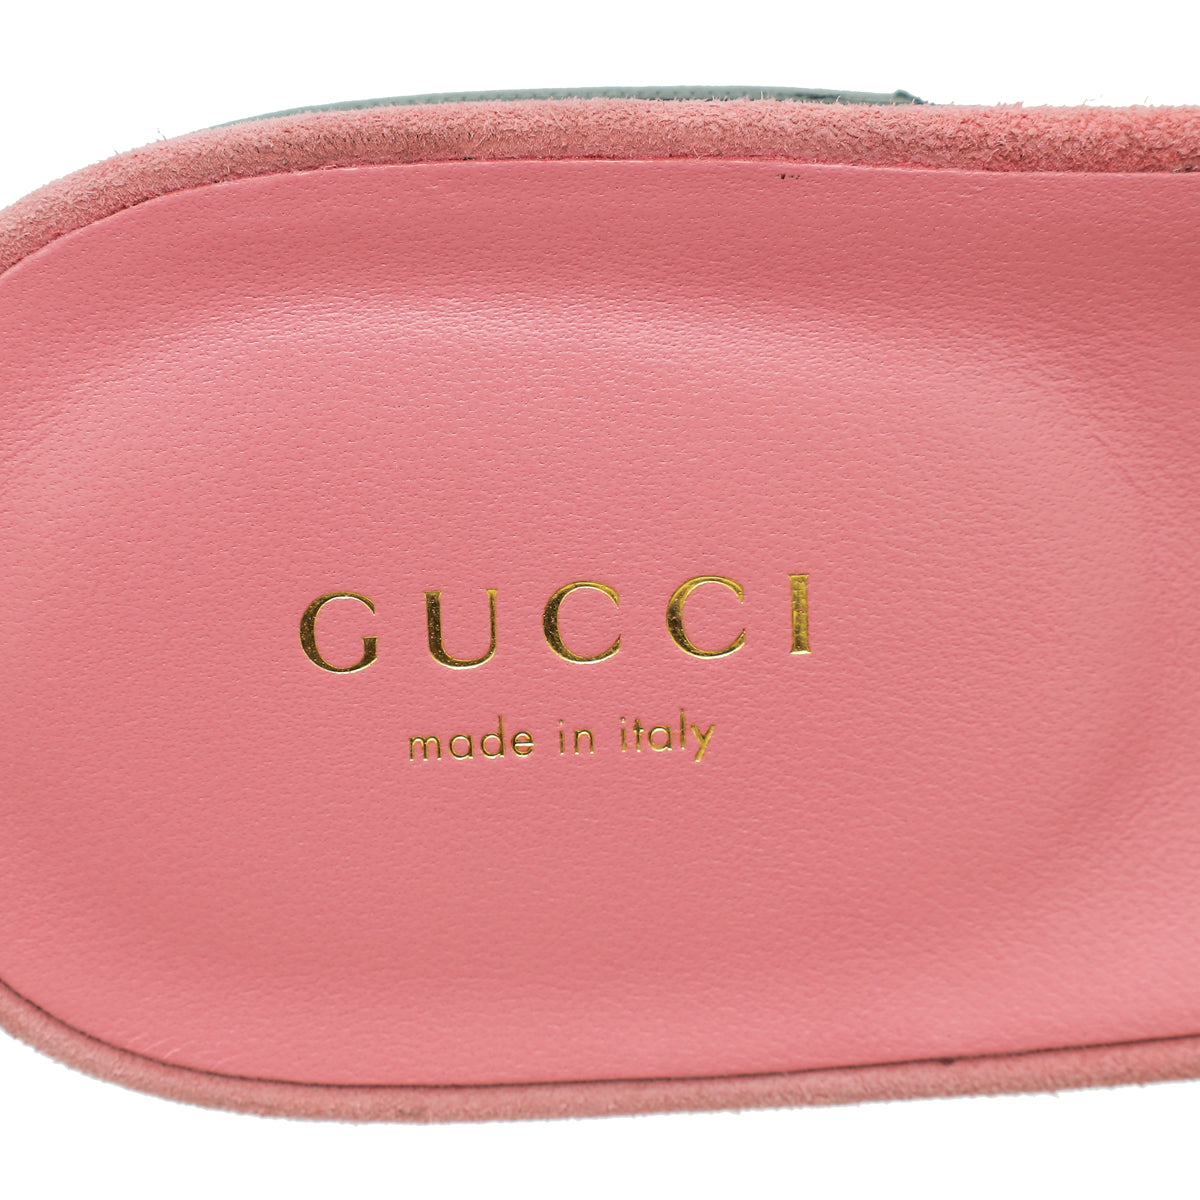 Gucci Bicolor Interlocking G Cut-Out Slide Sandals 39